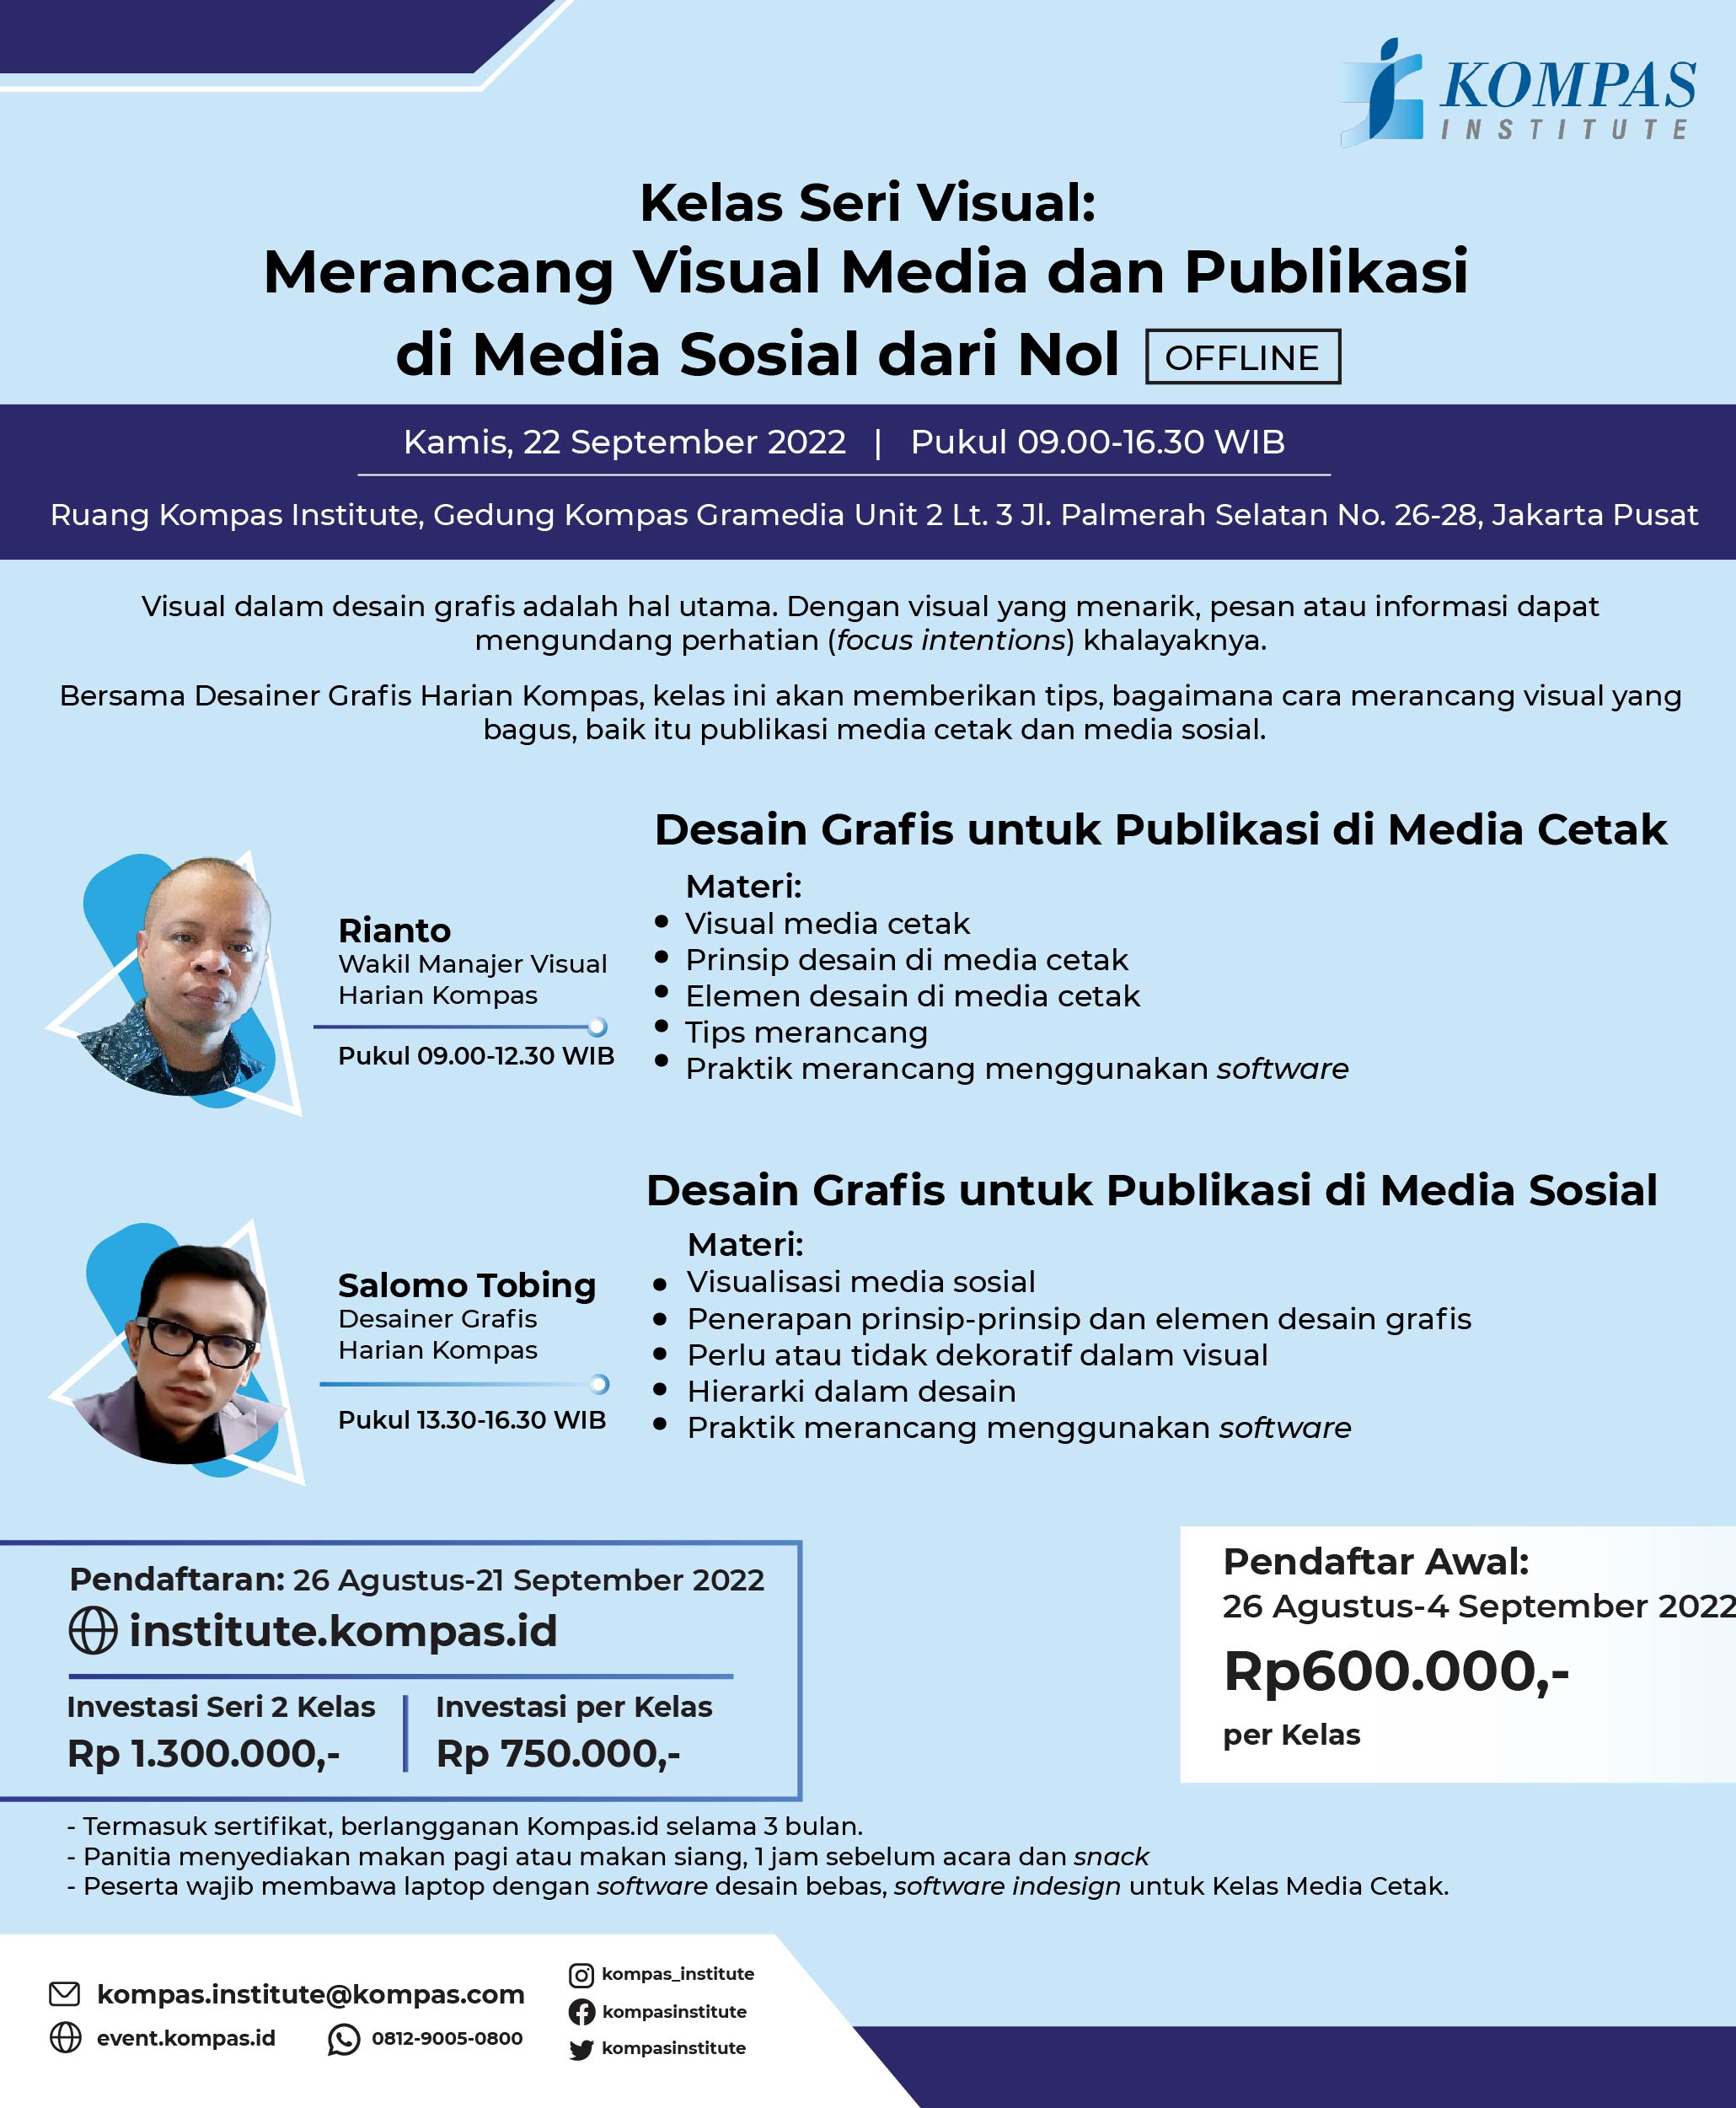 Kelas Seri: Merancang Visual Media dan Publikasi di Media Sosial dari Nol